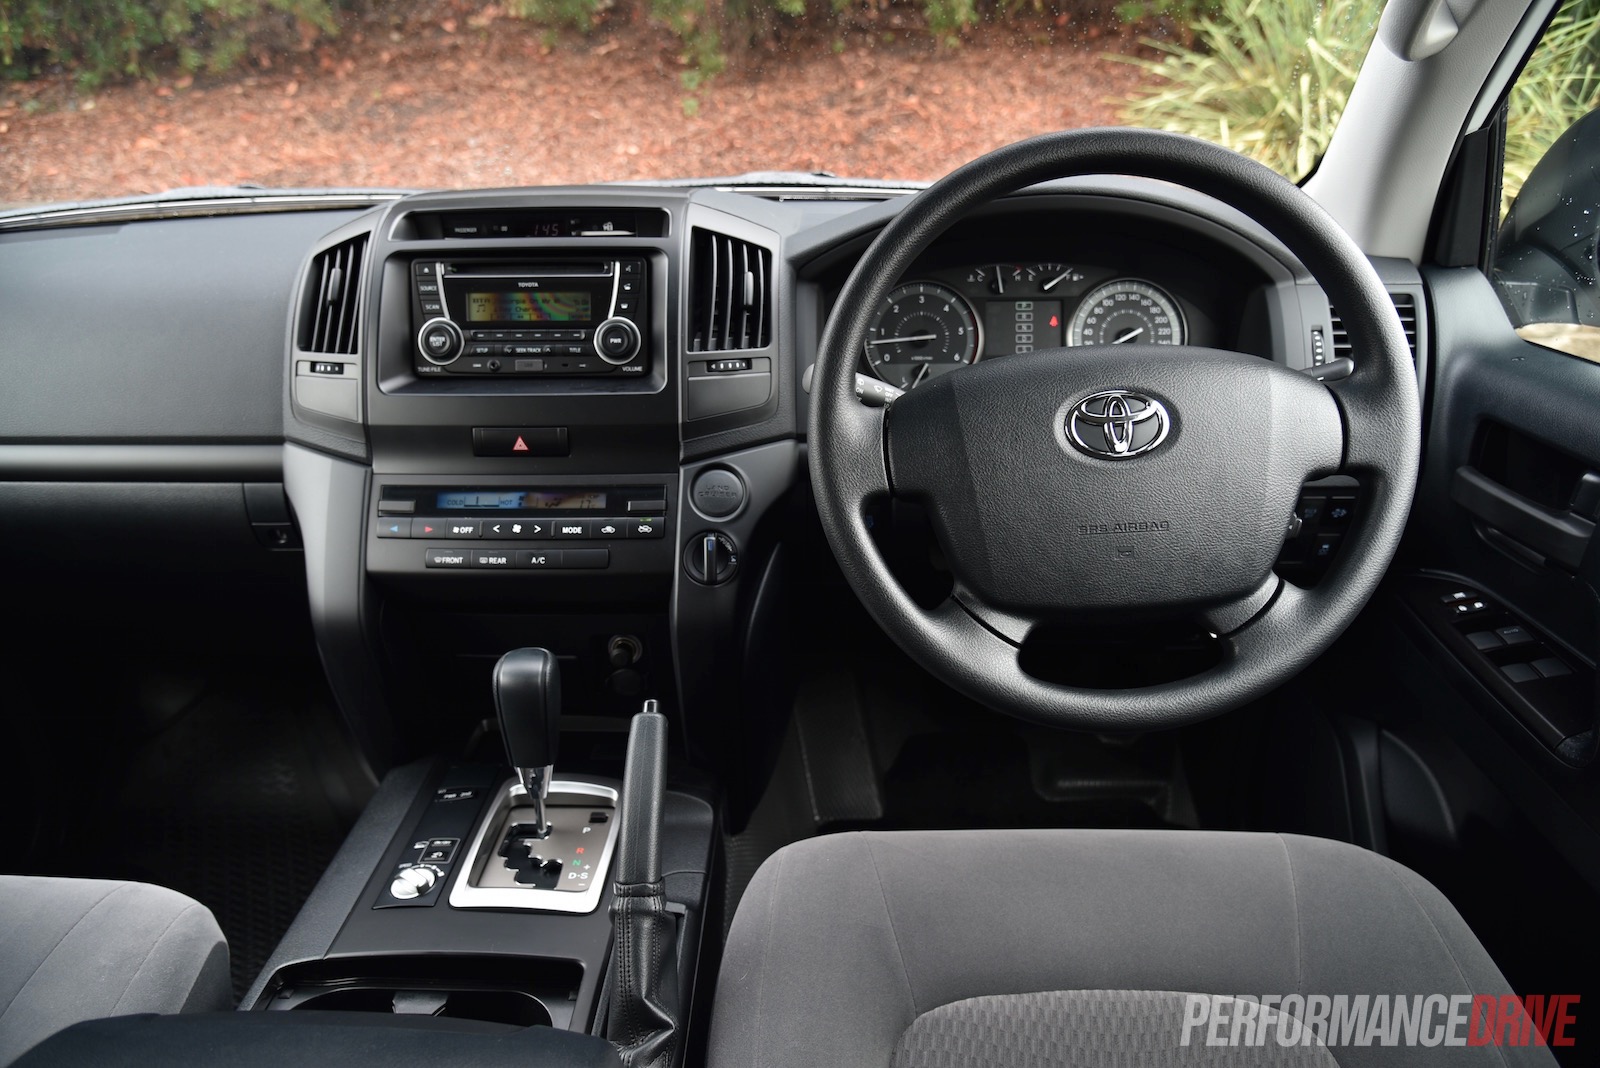 16 Toyota Landcruiser Gx Review Video Performancedrive